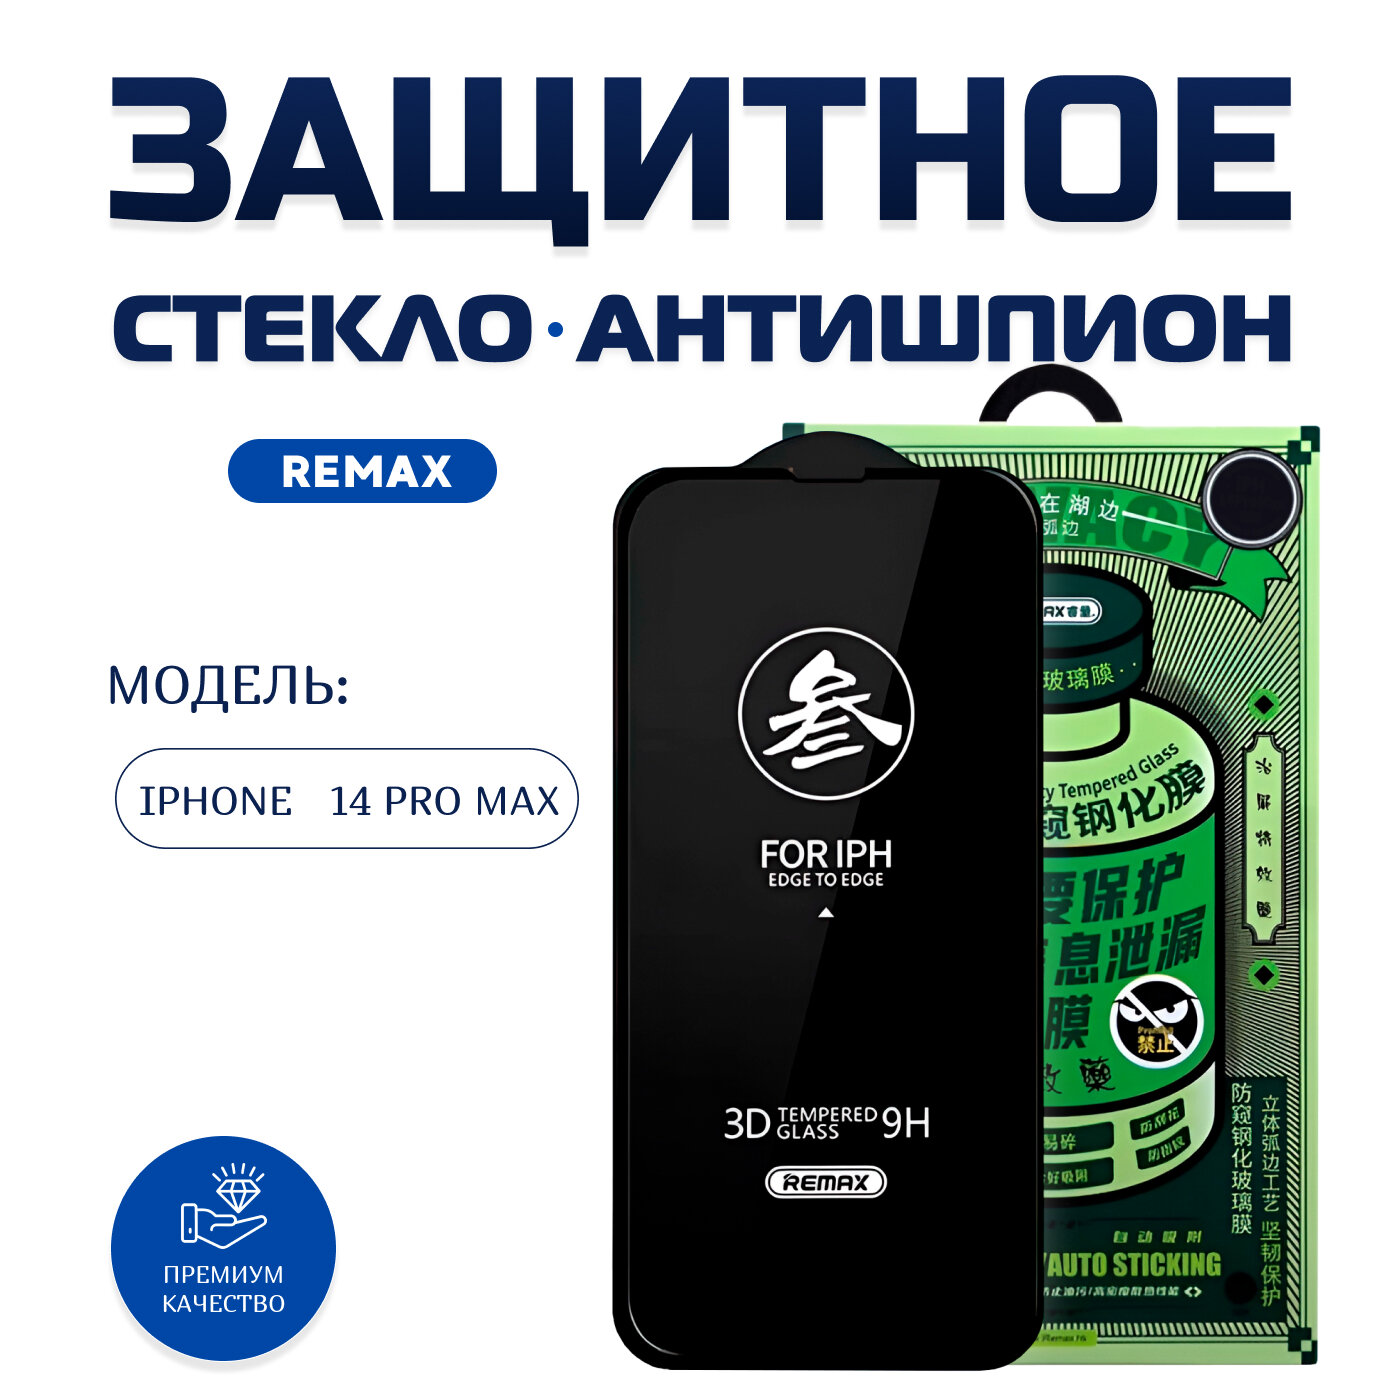 Стекло Remax Антишпион для iPhone 14 Pro Max